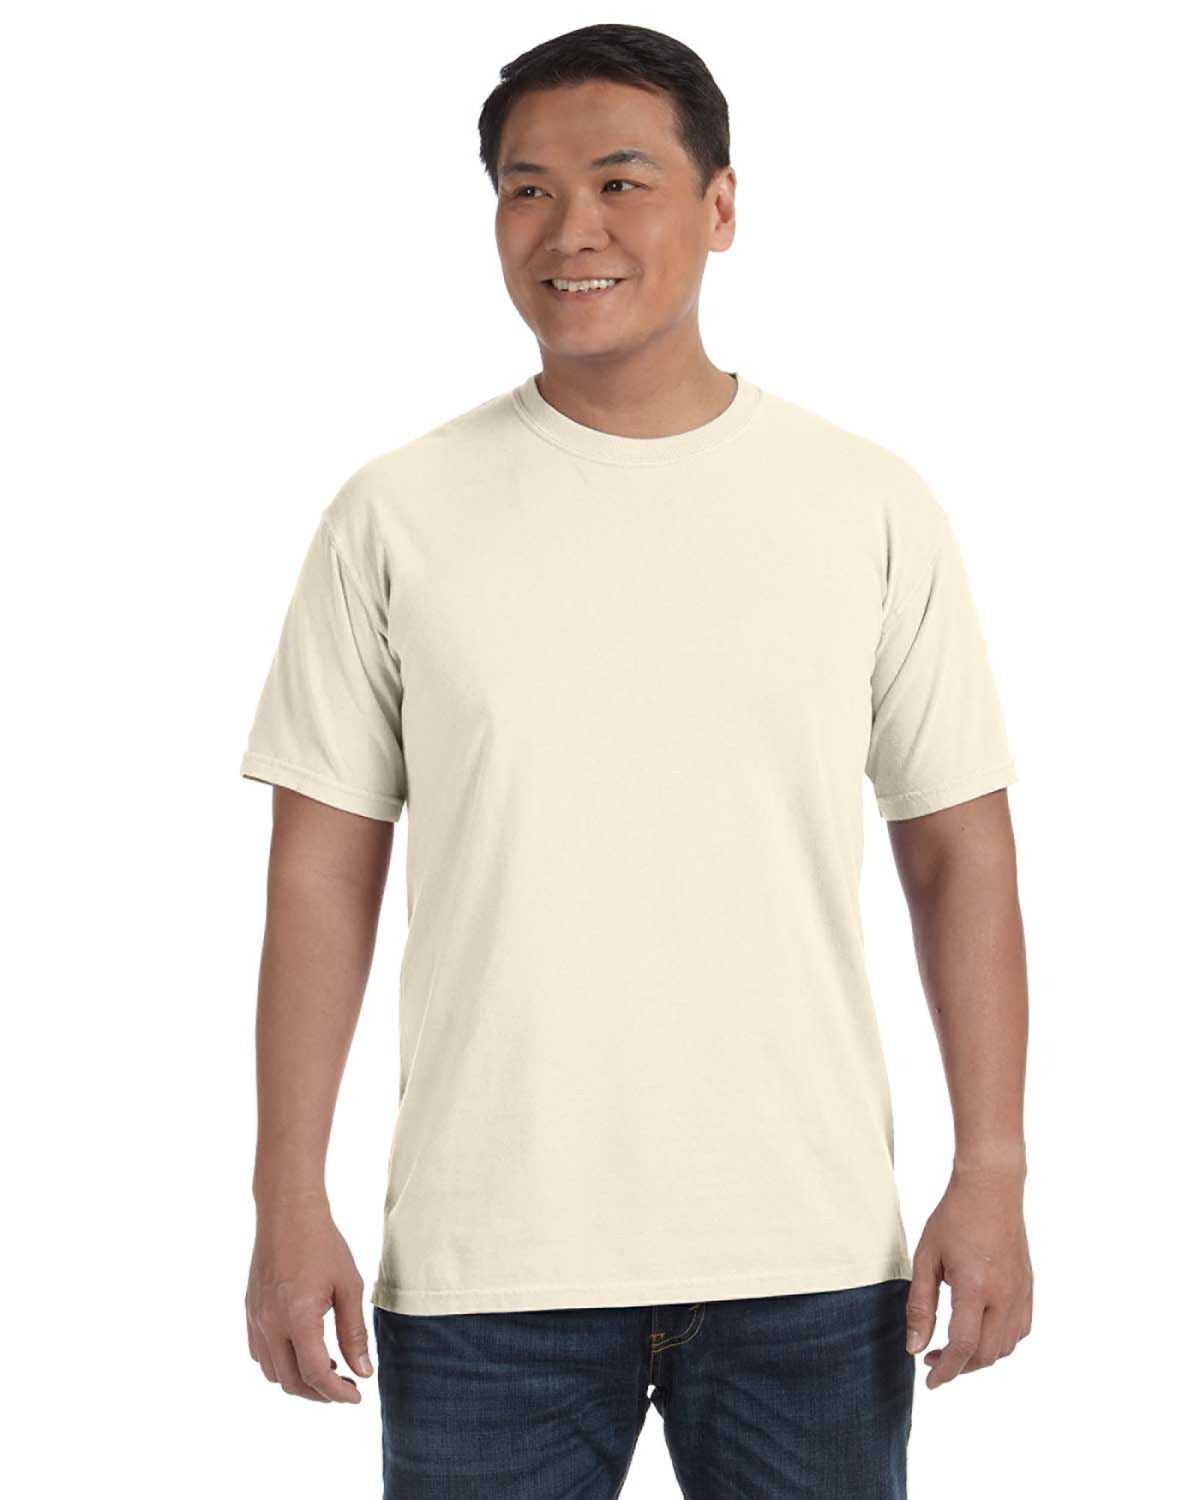 Bayside 5910 USA-Made Heavyweight Ringspun T-Shirt - Cream